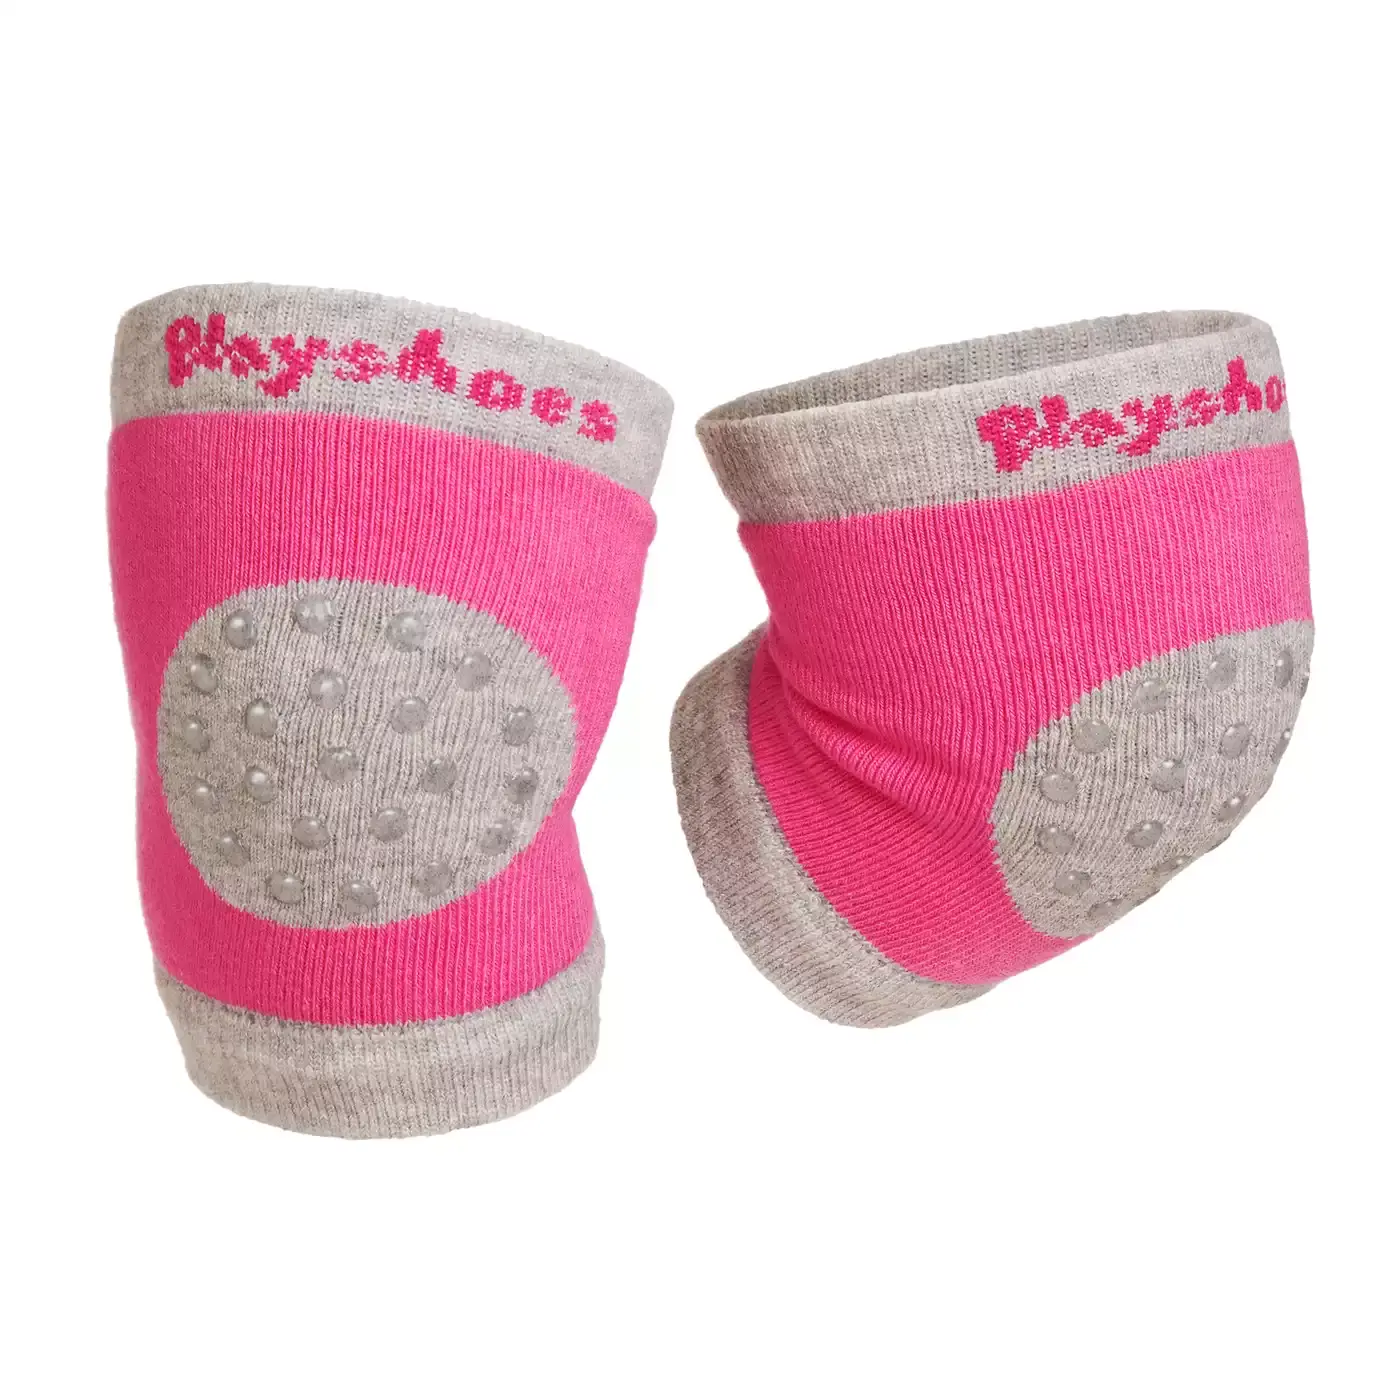 Knieschoner Playshoes Rosa Pink 2019579004003 3